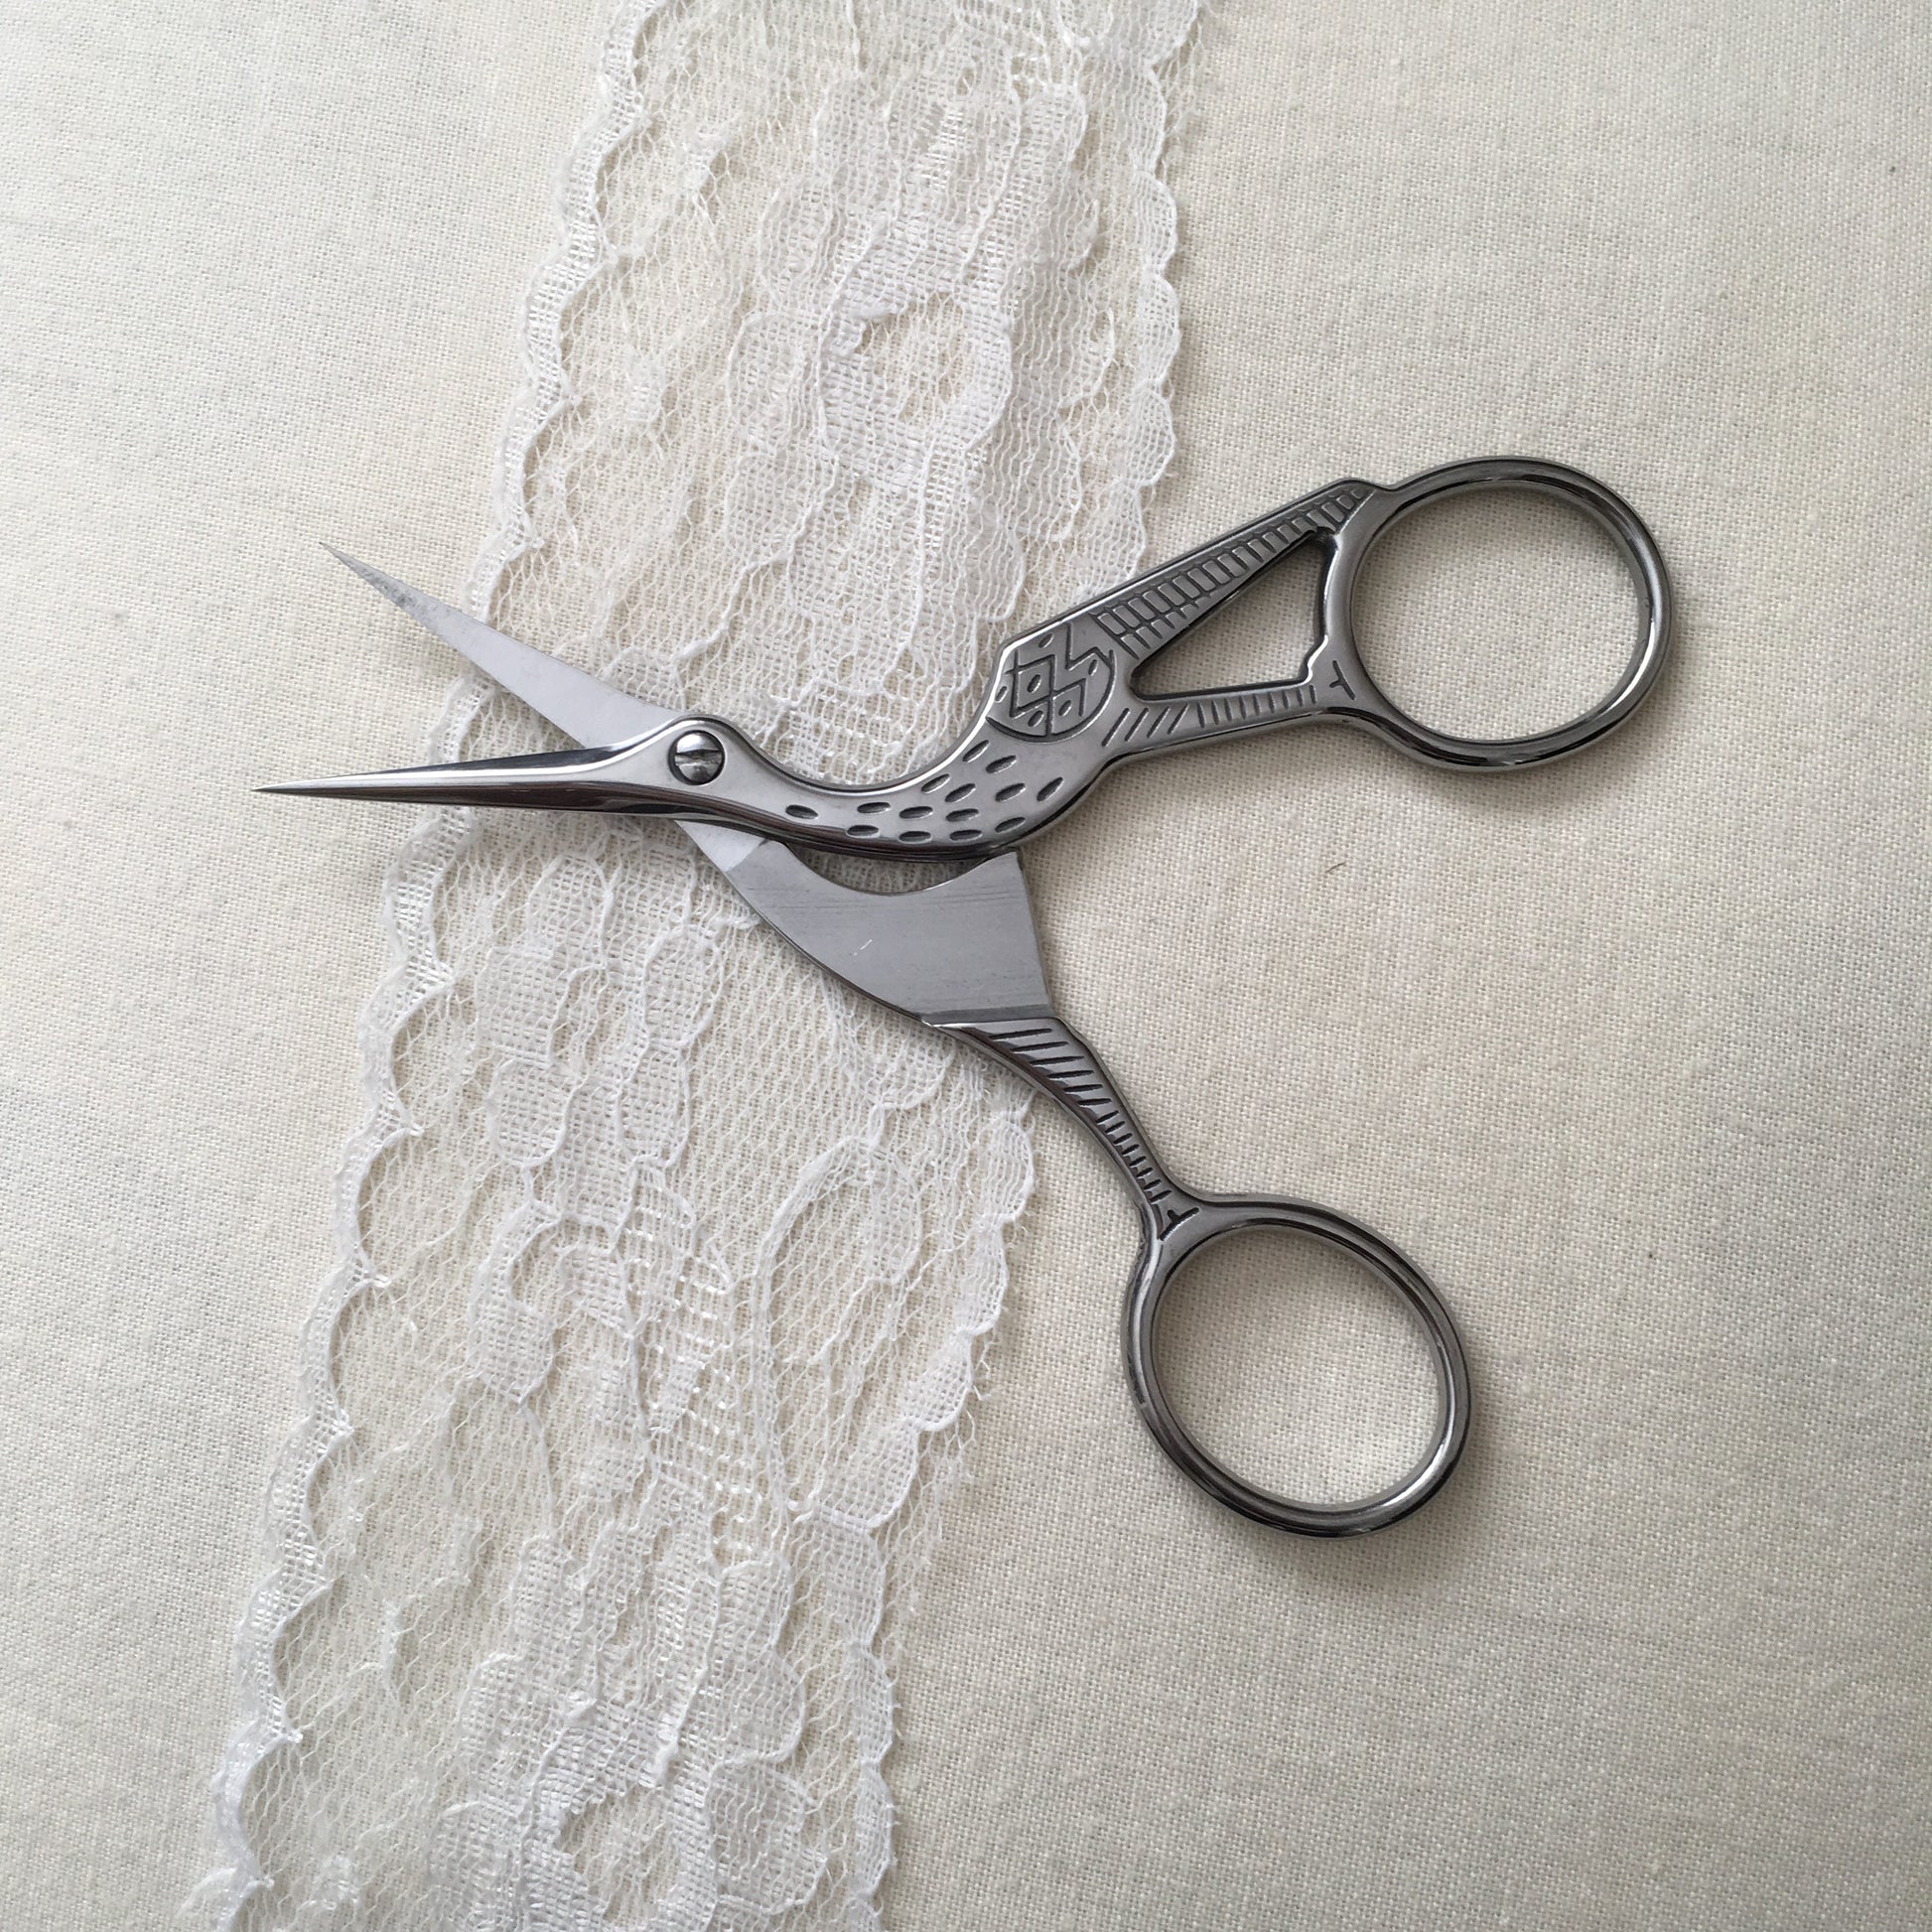 Vintage Embroidery Scissors Antique Style Scissors Sewing Scissors